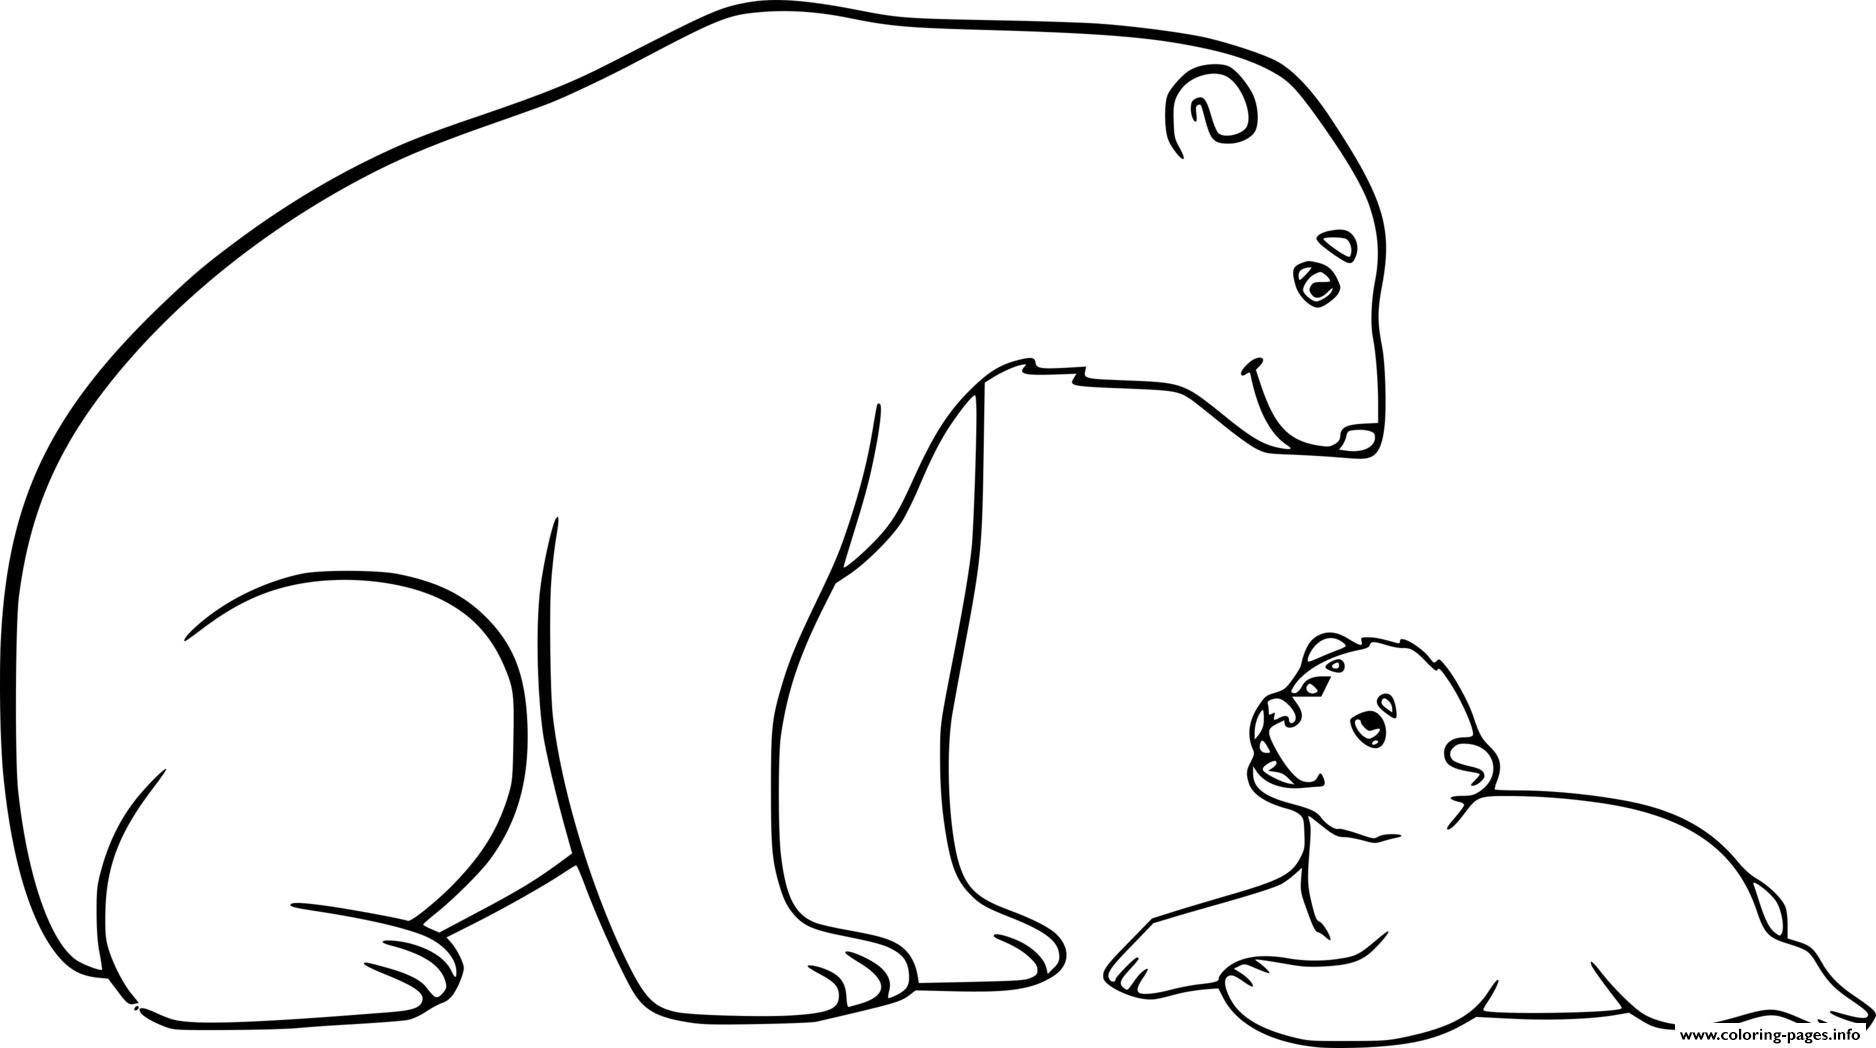 Fun polar bear coloring book for kids 3-4 years old